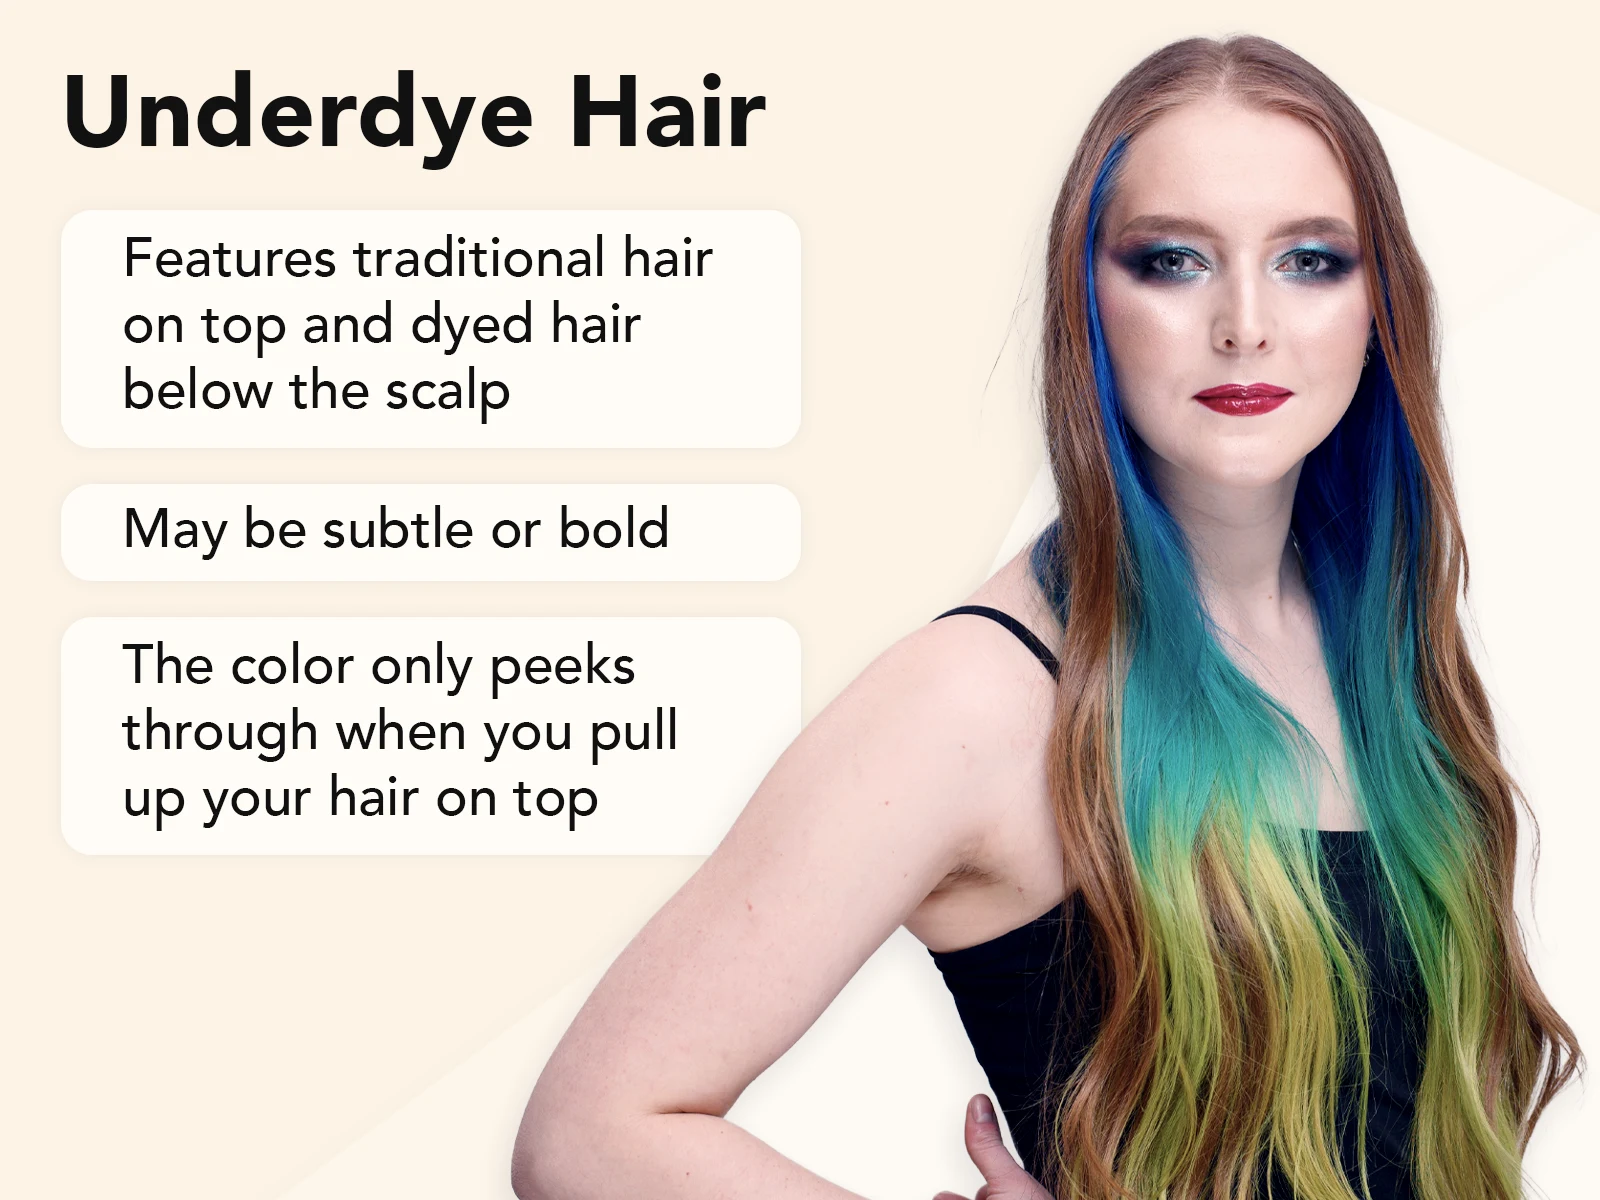 15 Underdye Hair Trends We Love in 2023